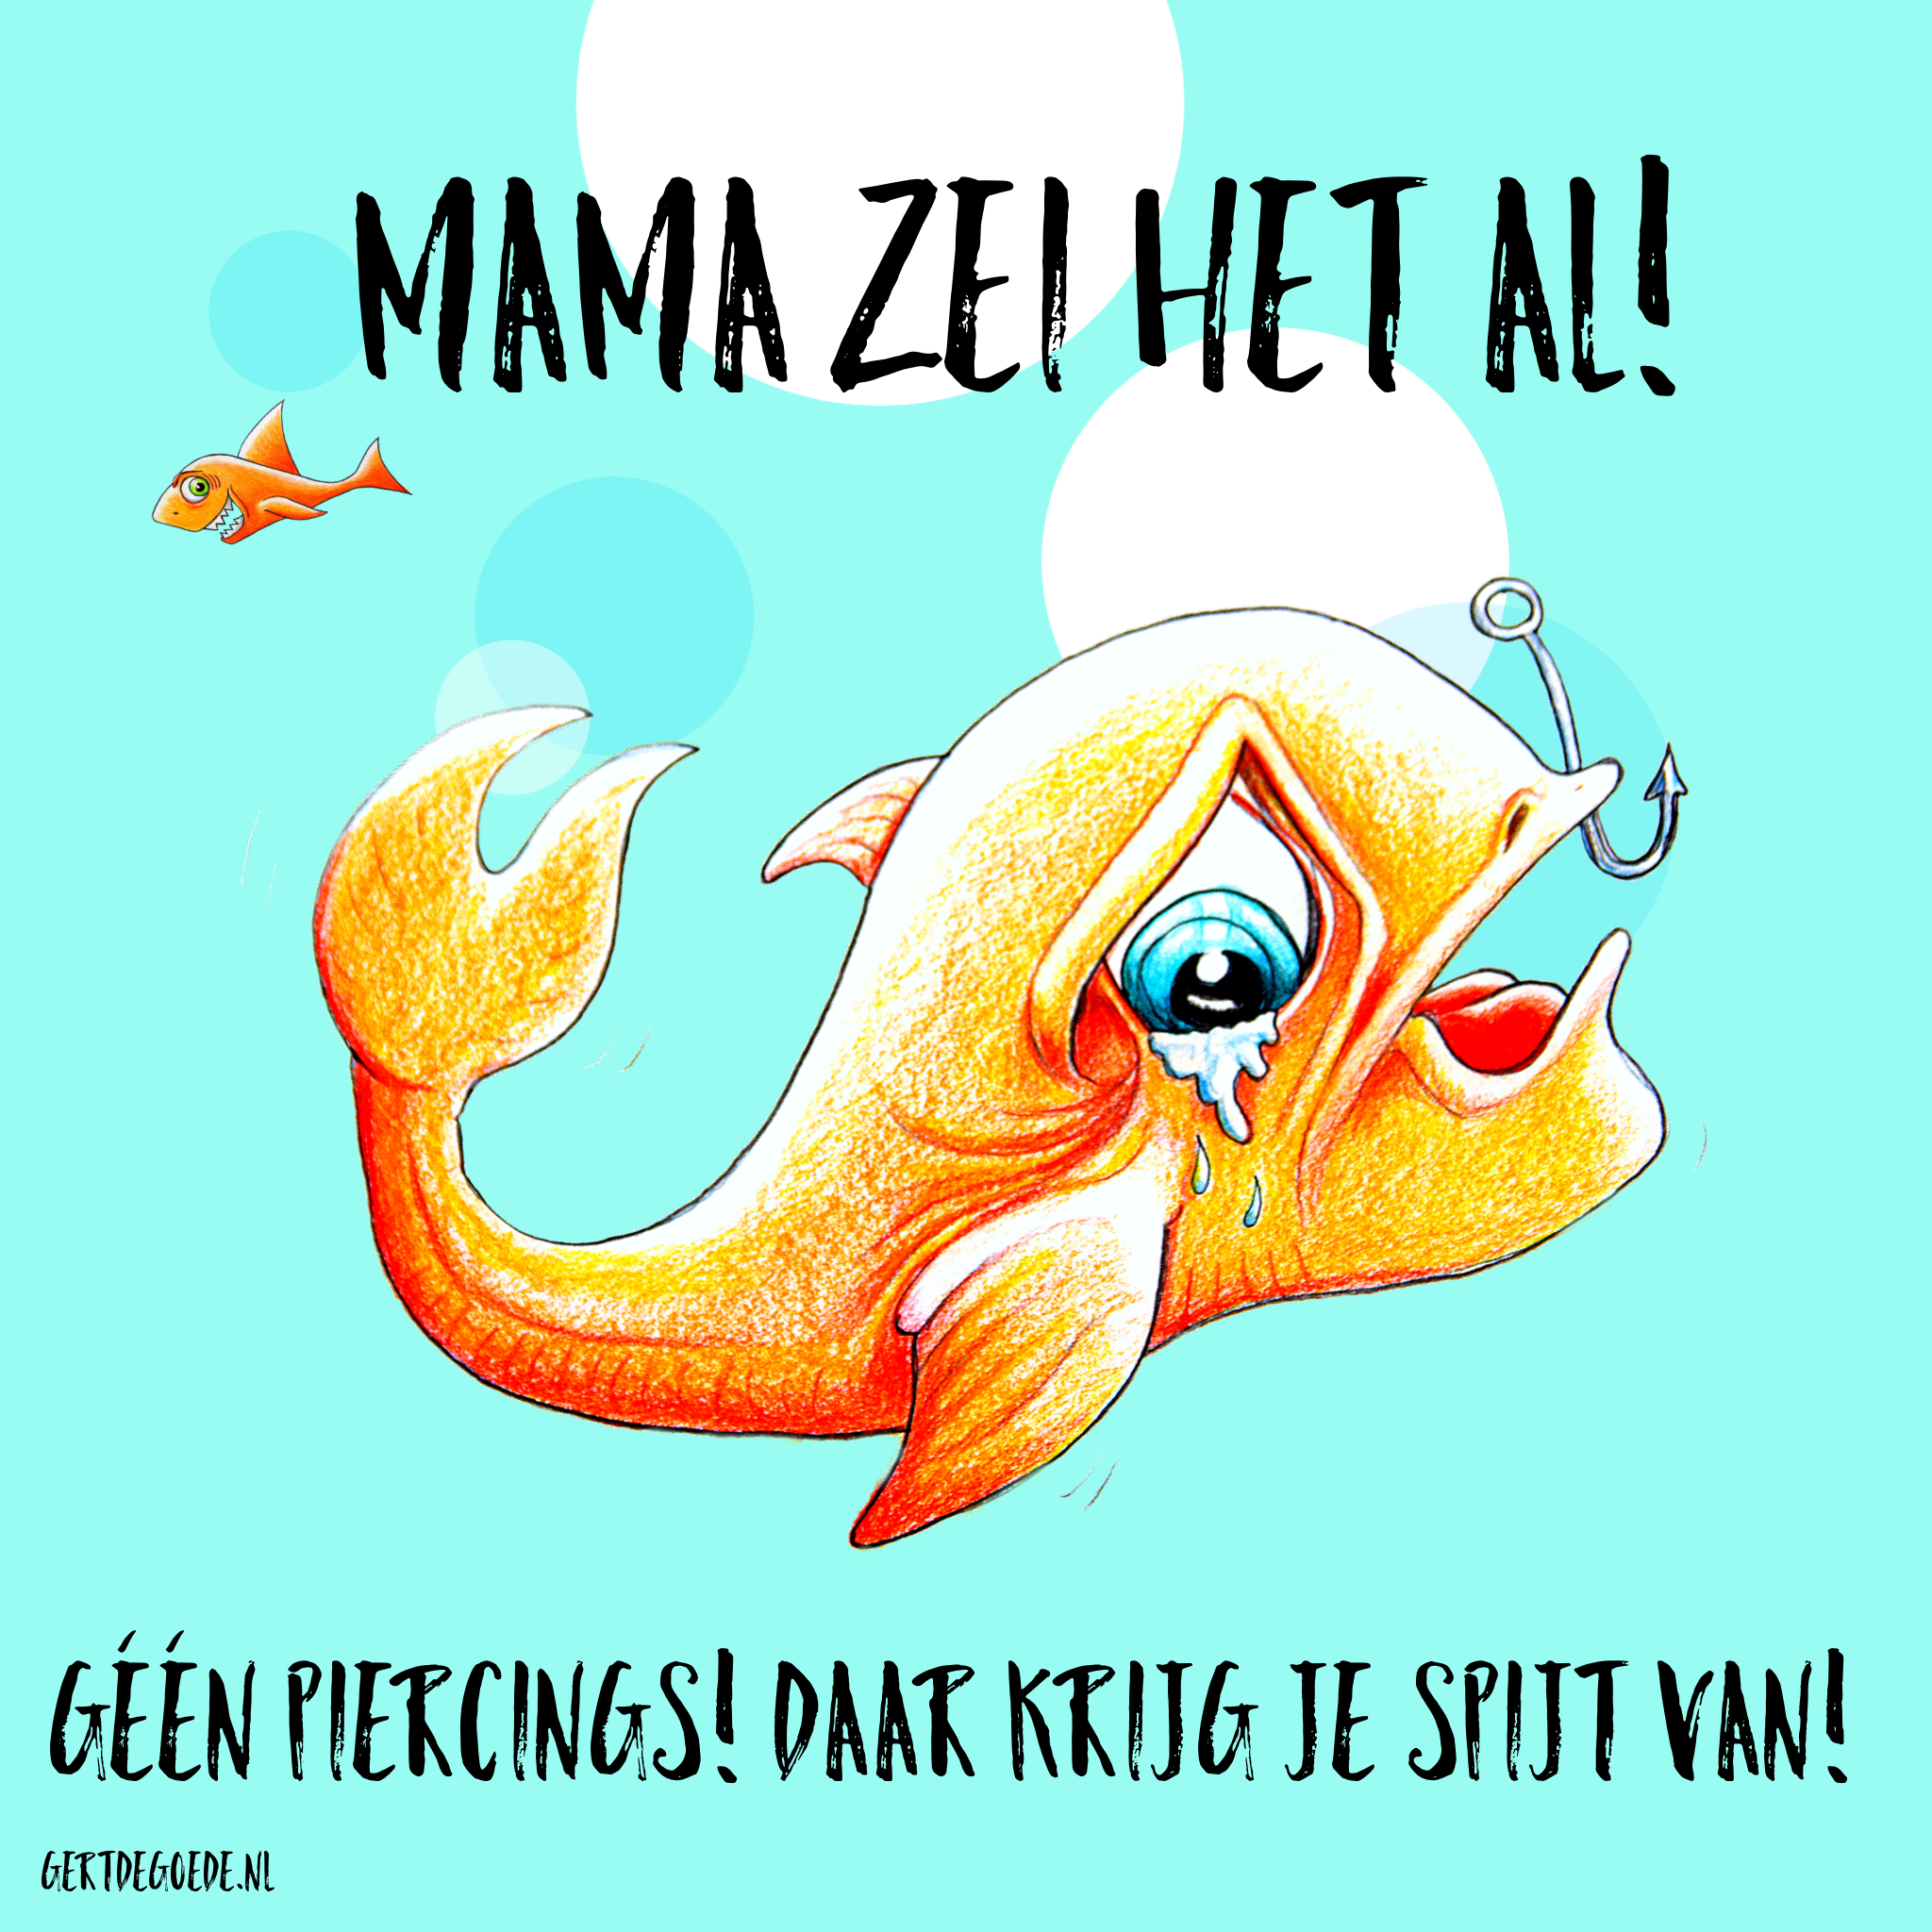 vishaakje piercing vis mama mamma spijt van cartoon nederlands nederland  fishhook hook fish named fred